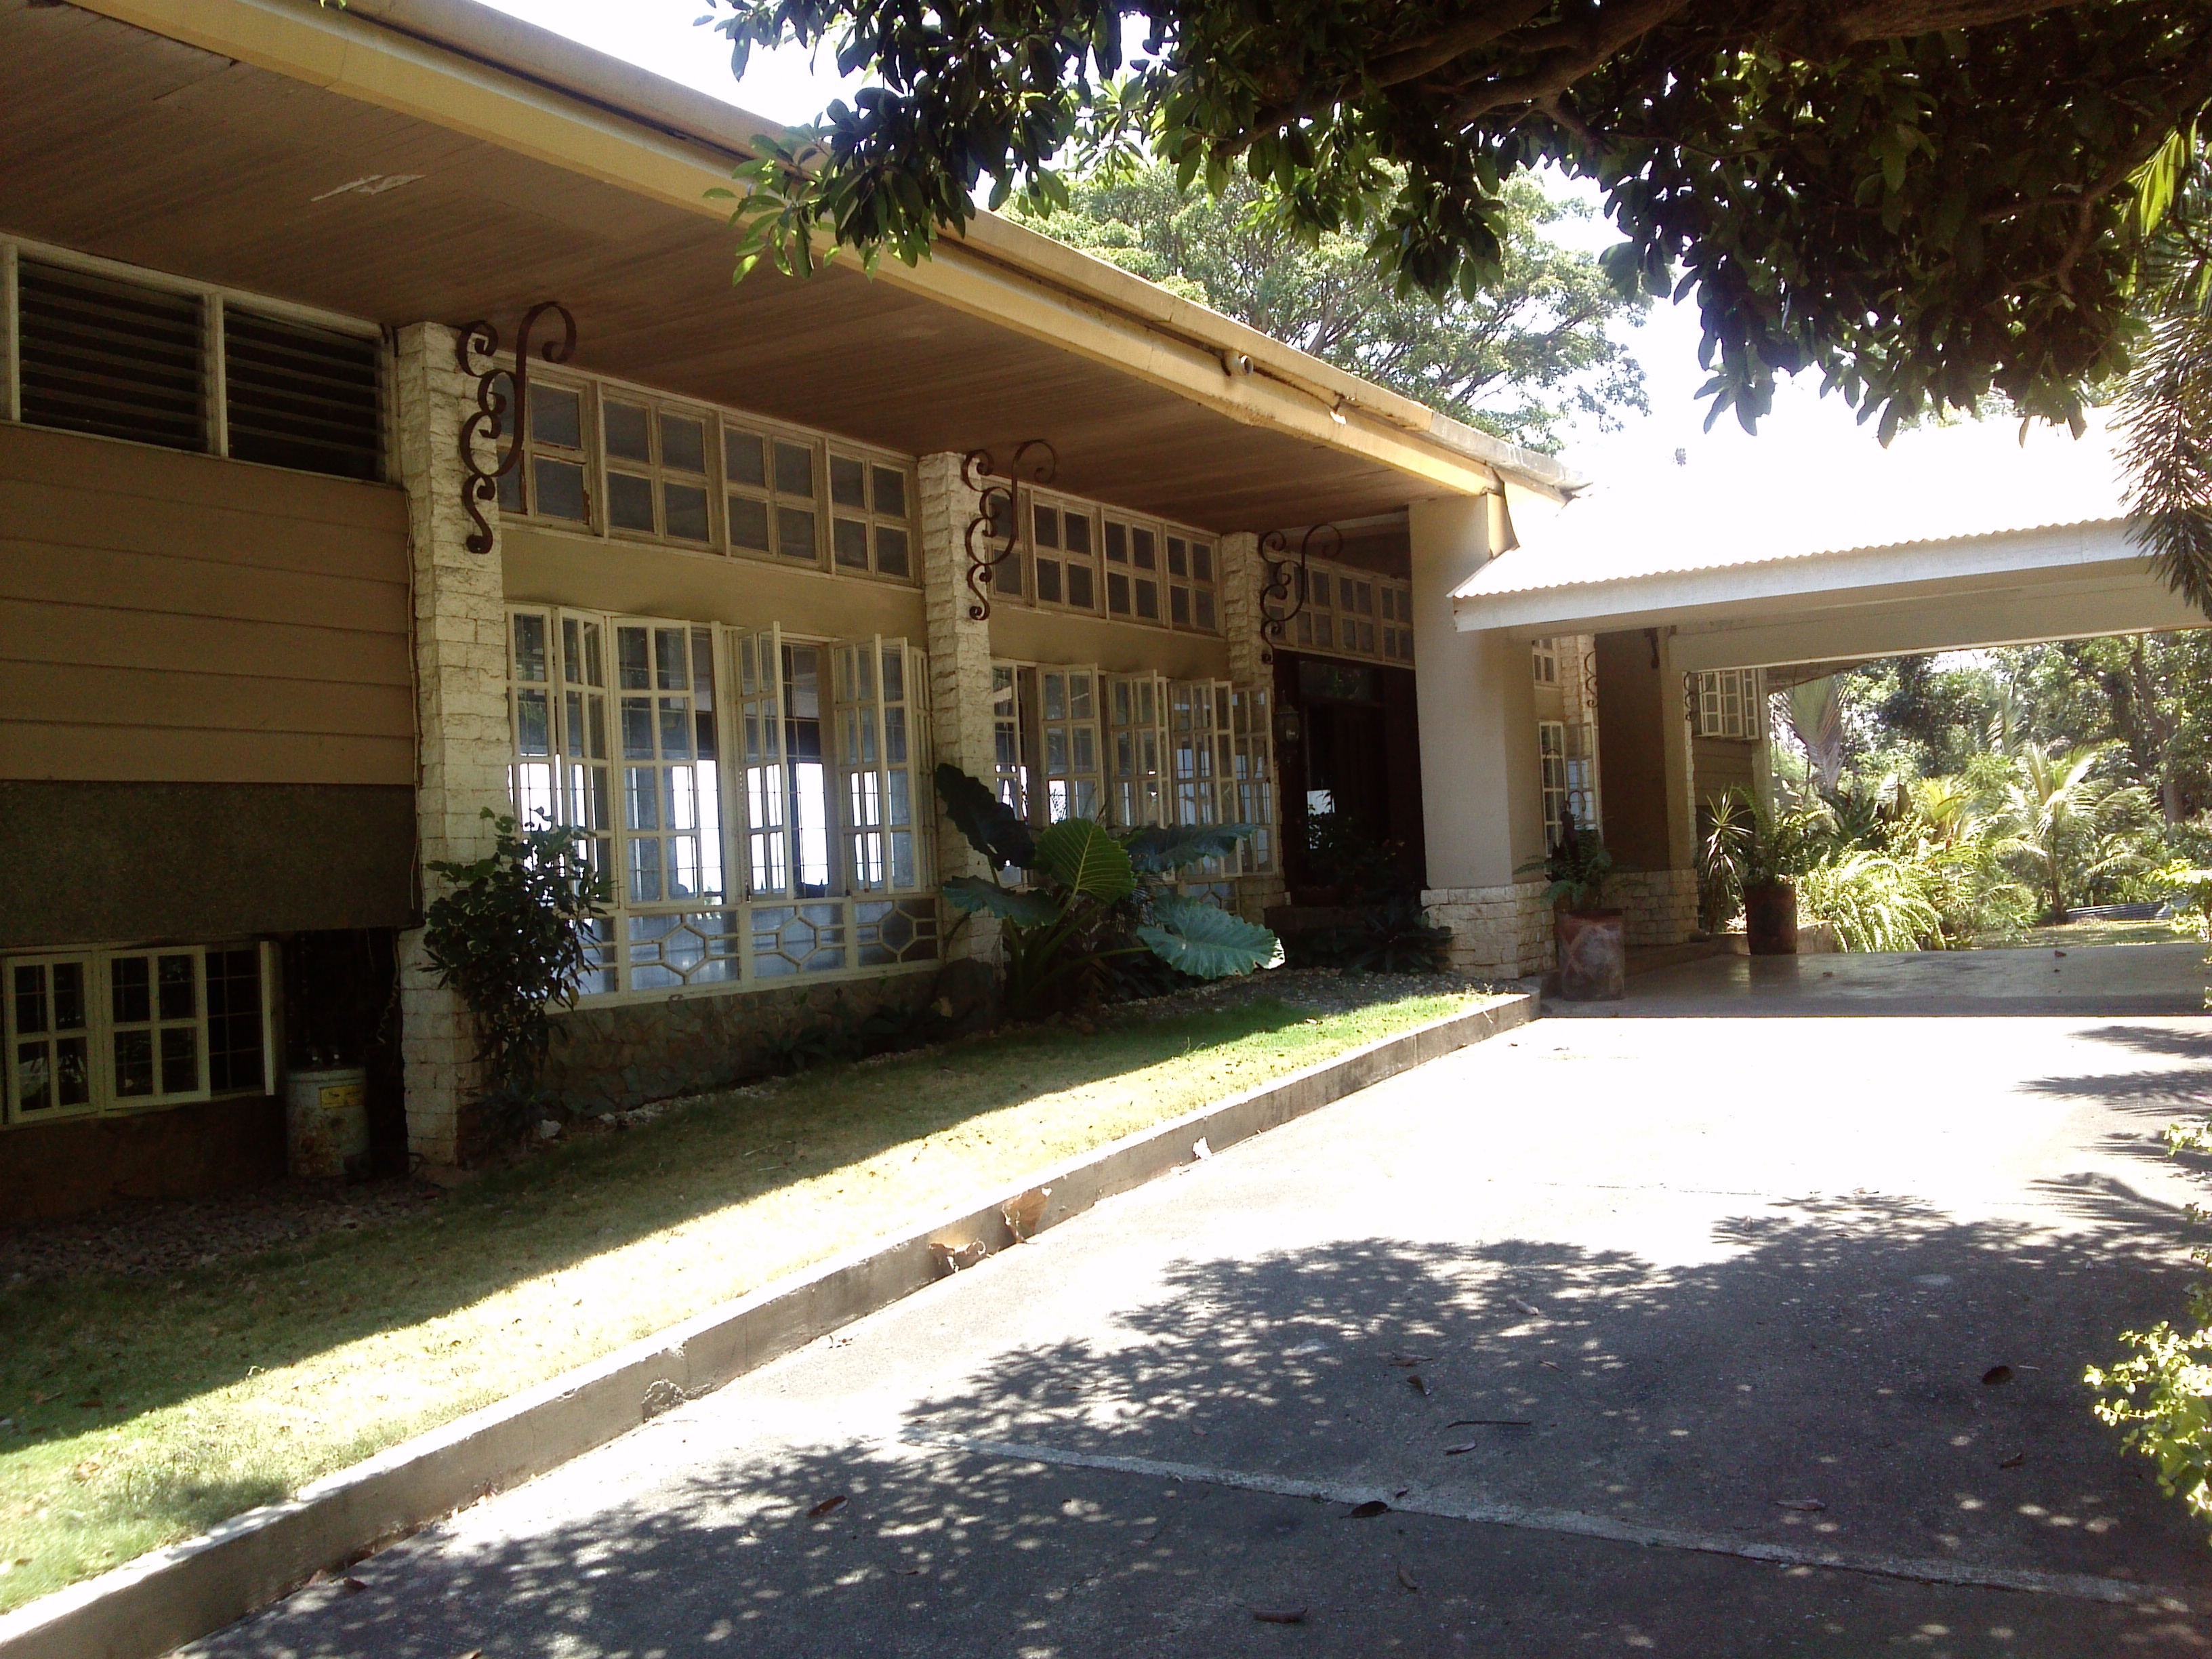 The Malasag House entrance